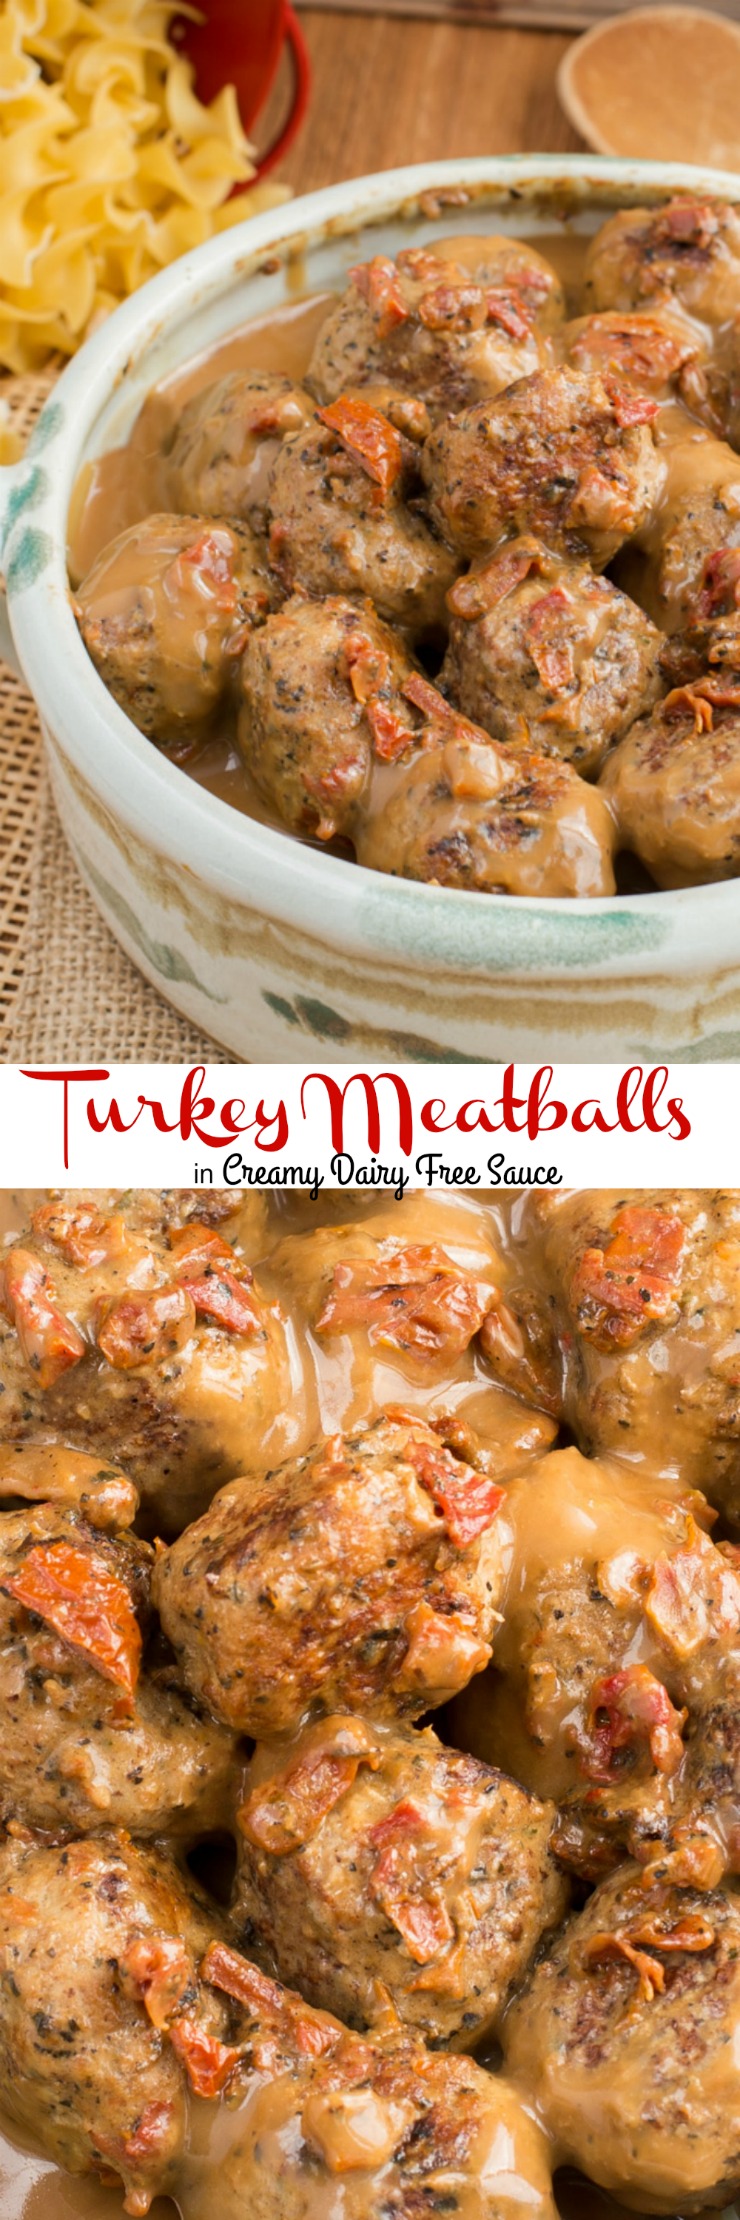 Turkey Meatballs in dairy free cream sauce